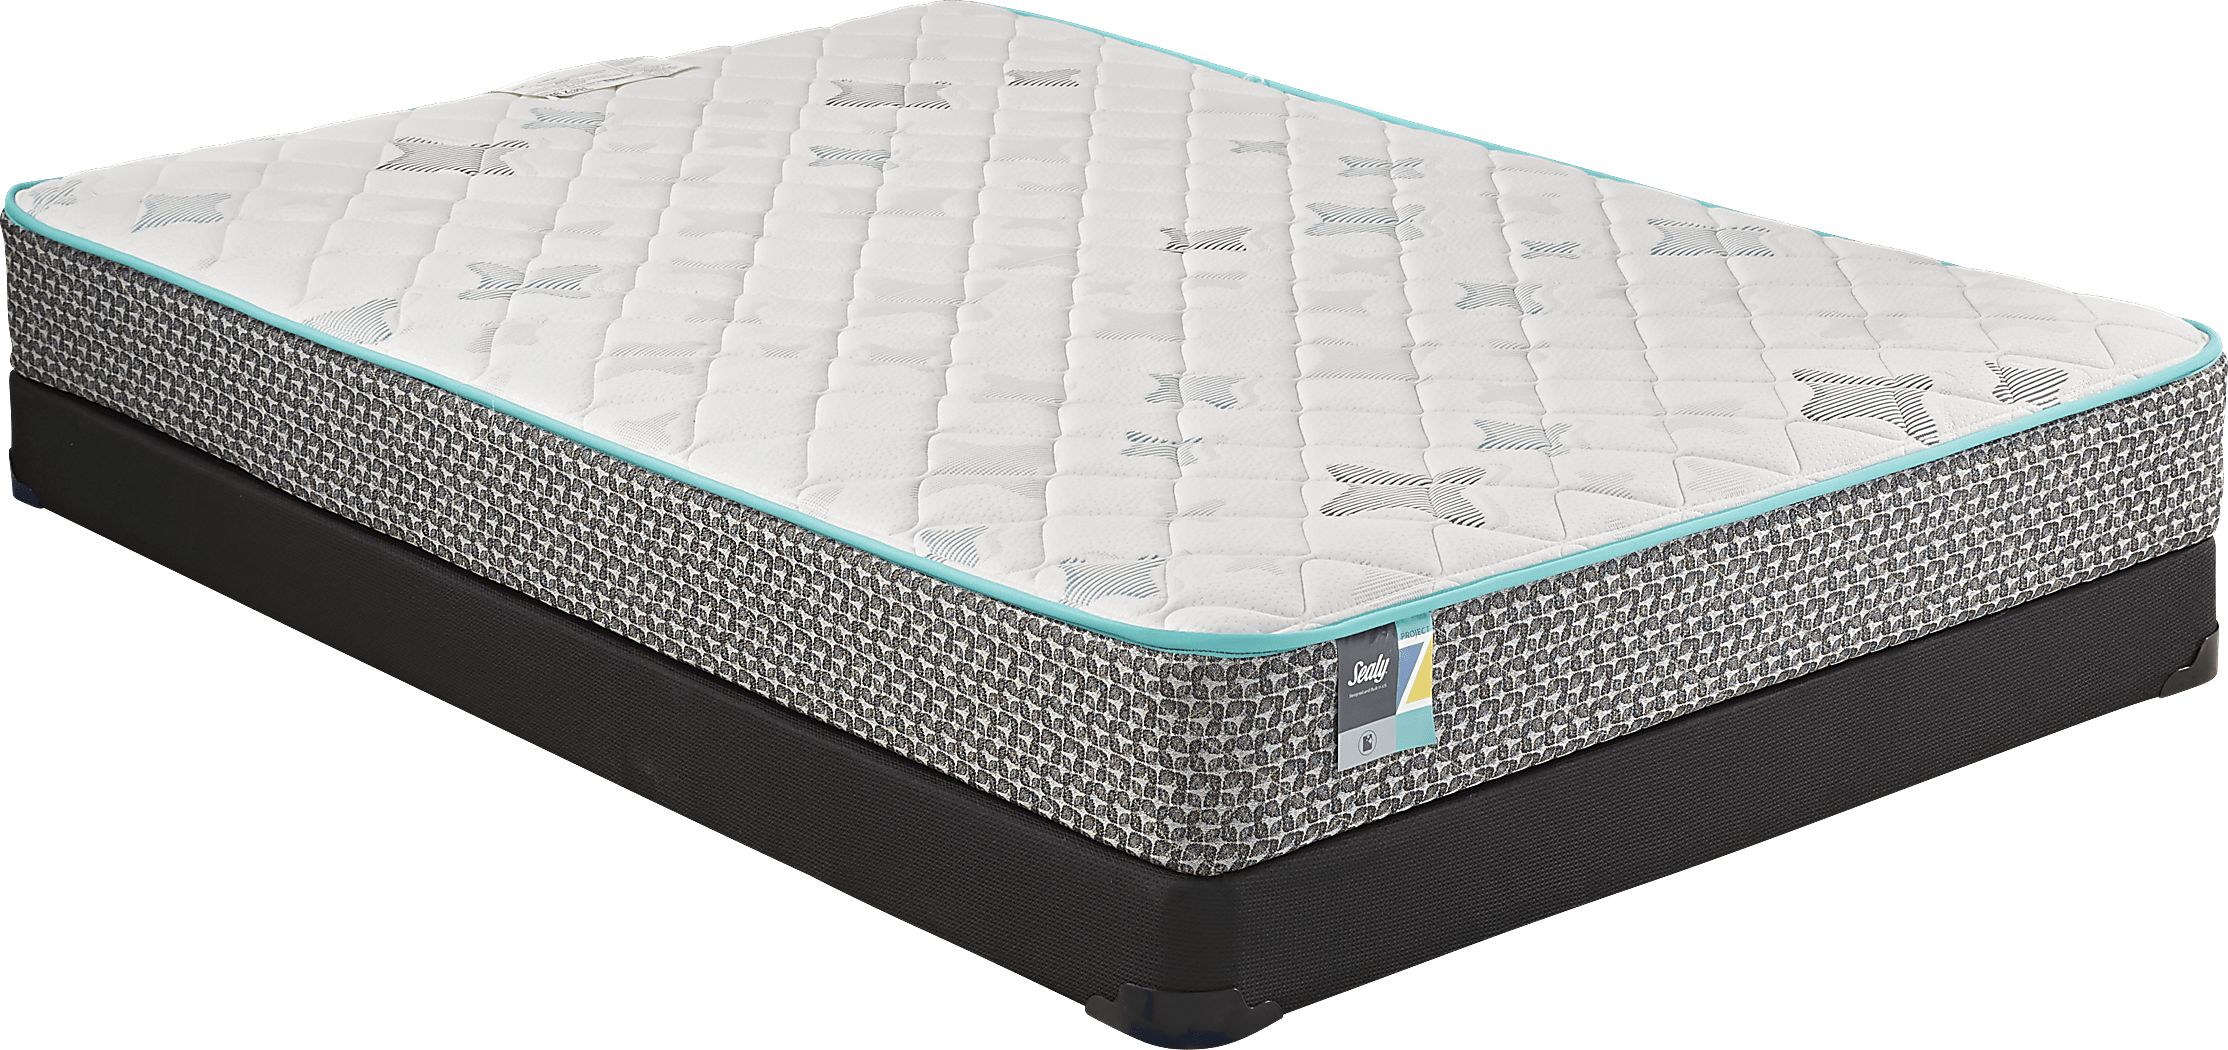 sealy z-301 full mattress reviews